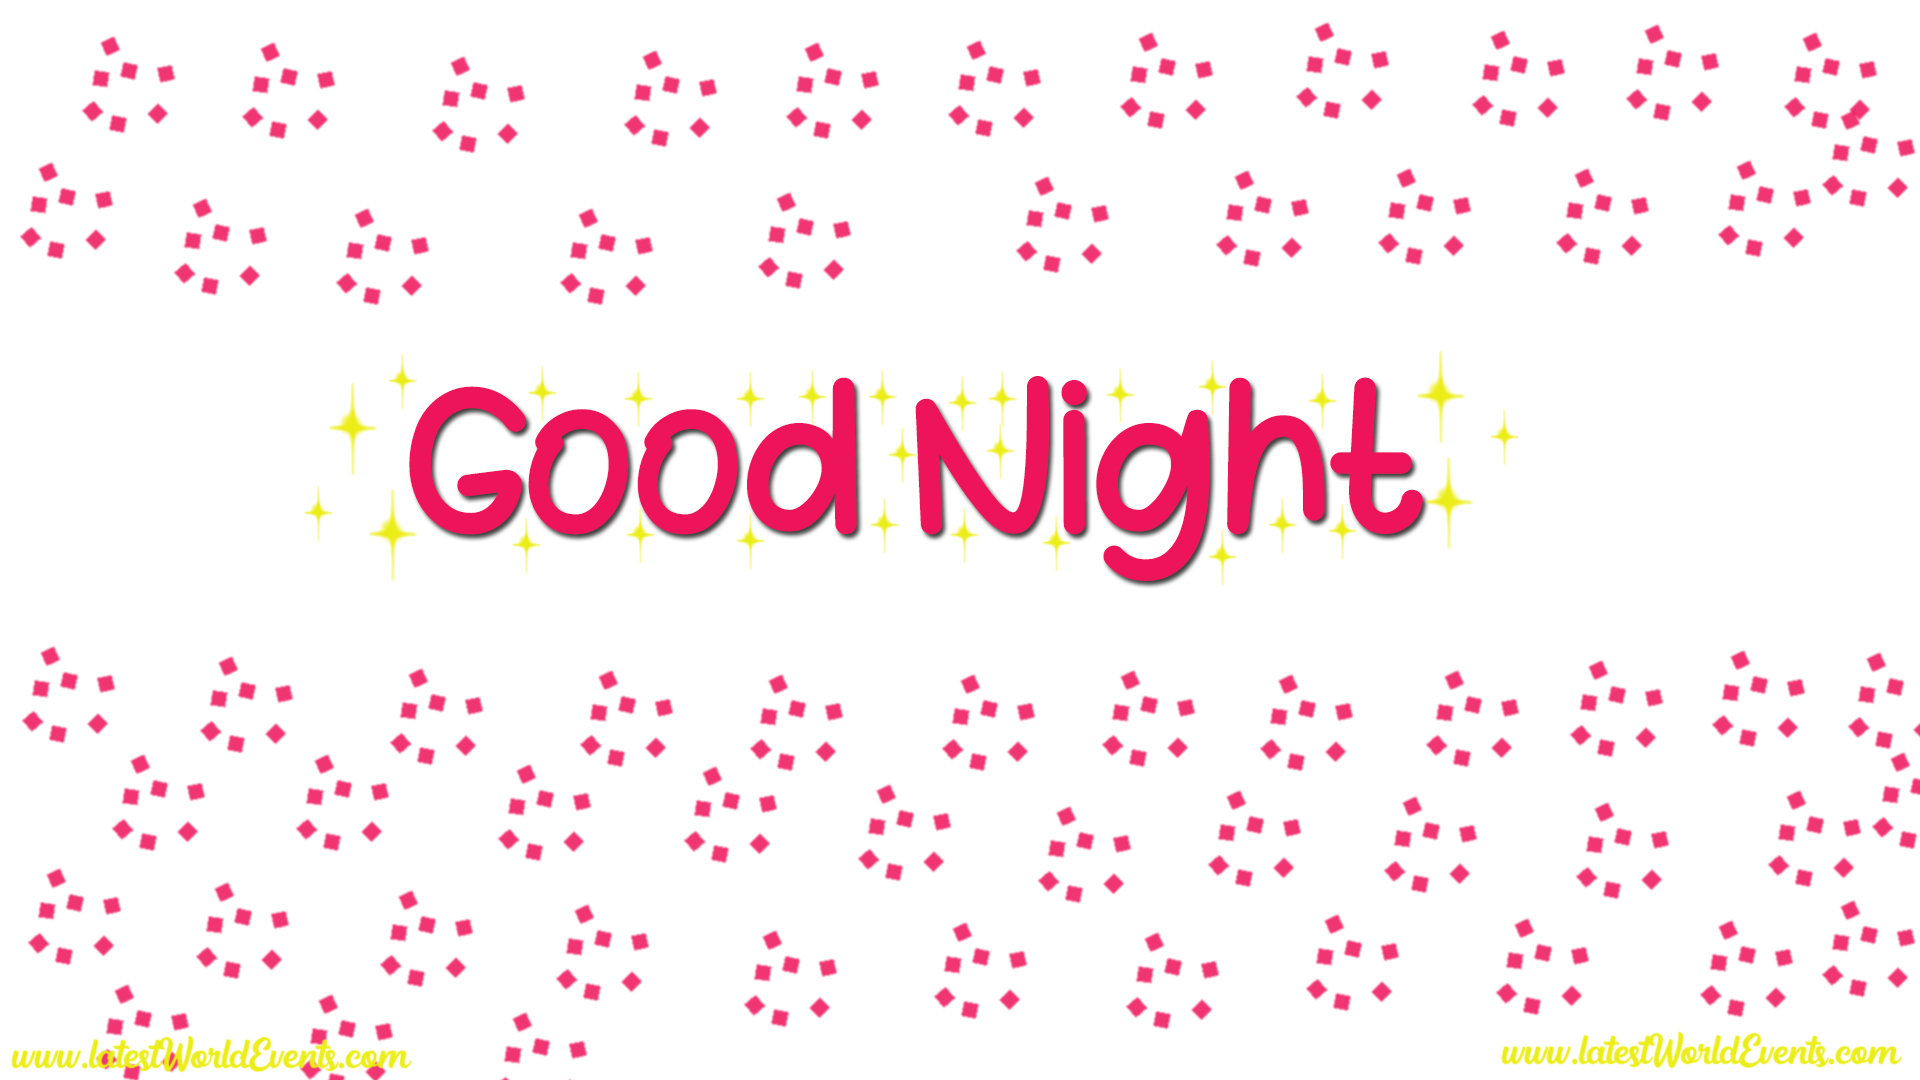 Beautiful Good Night Wishes - Latest World Events